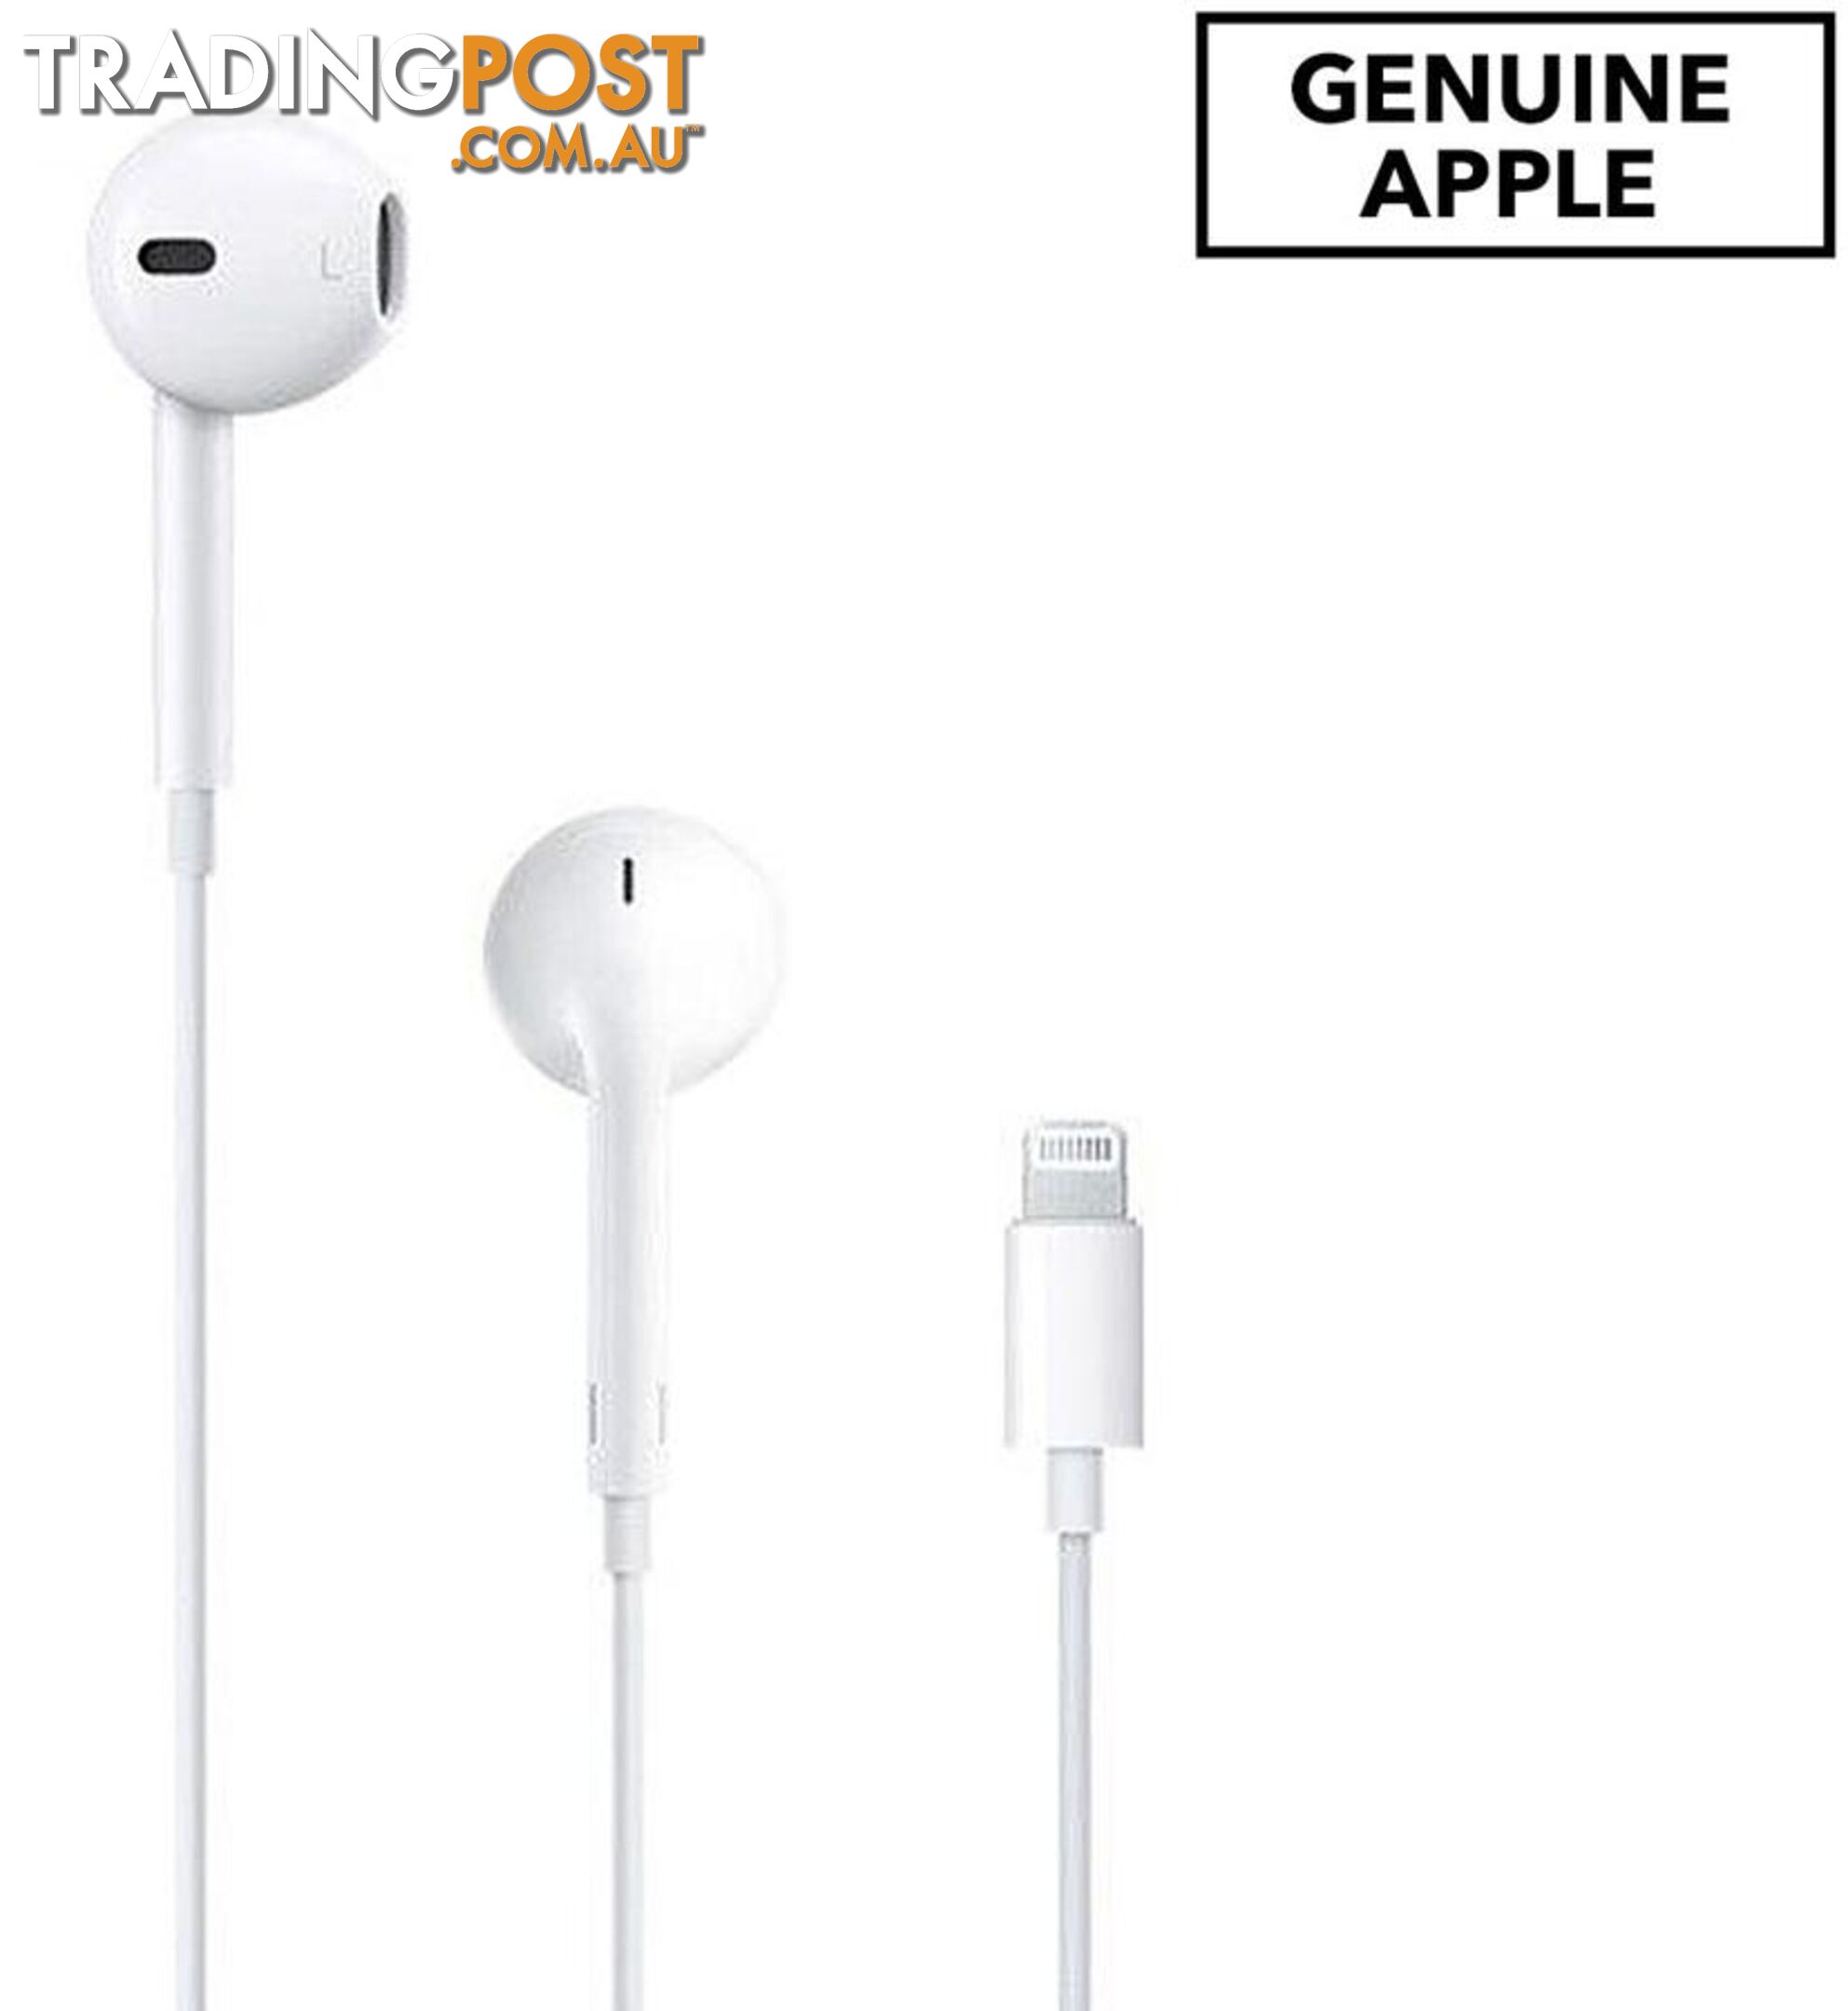 Genuine Apple Earpod Earphone with Lightning Connector for Iphone Ipad - Apple - 885909650132